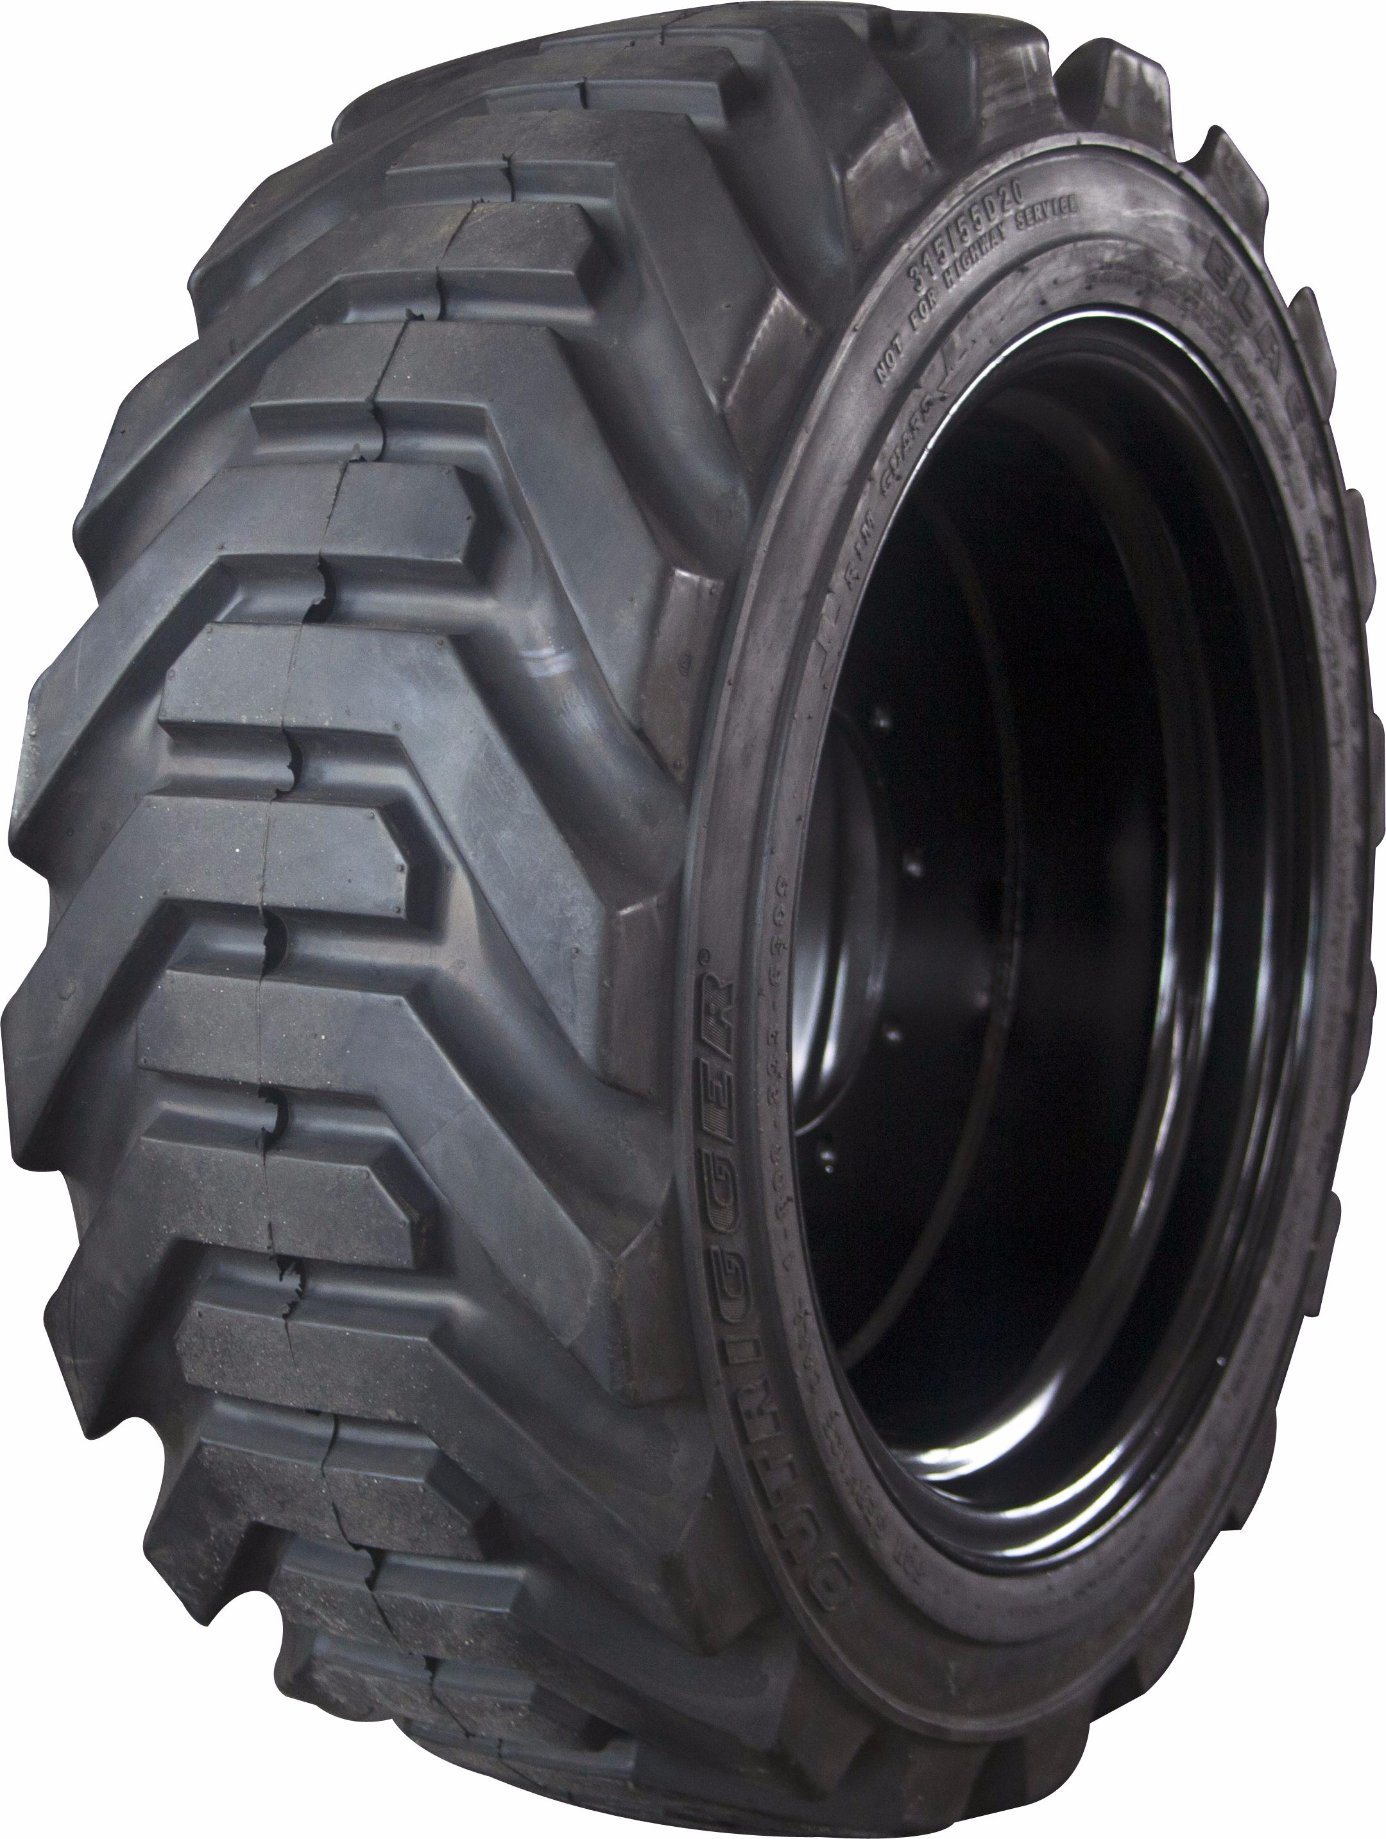 All Steel Radial OTR Tyres for Caterpillar (17.5R25 20.5R25)